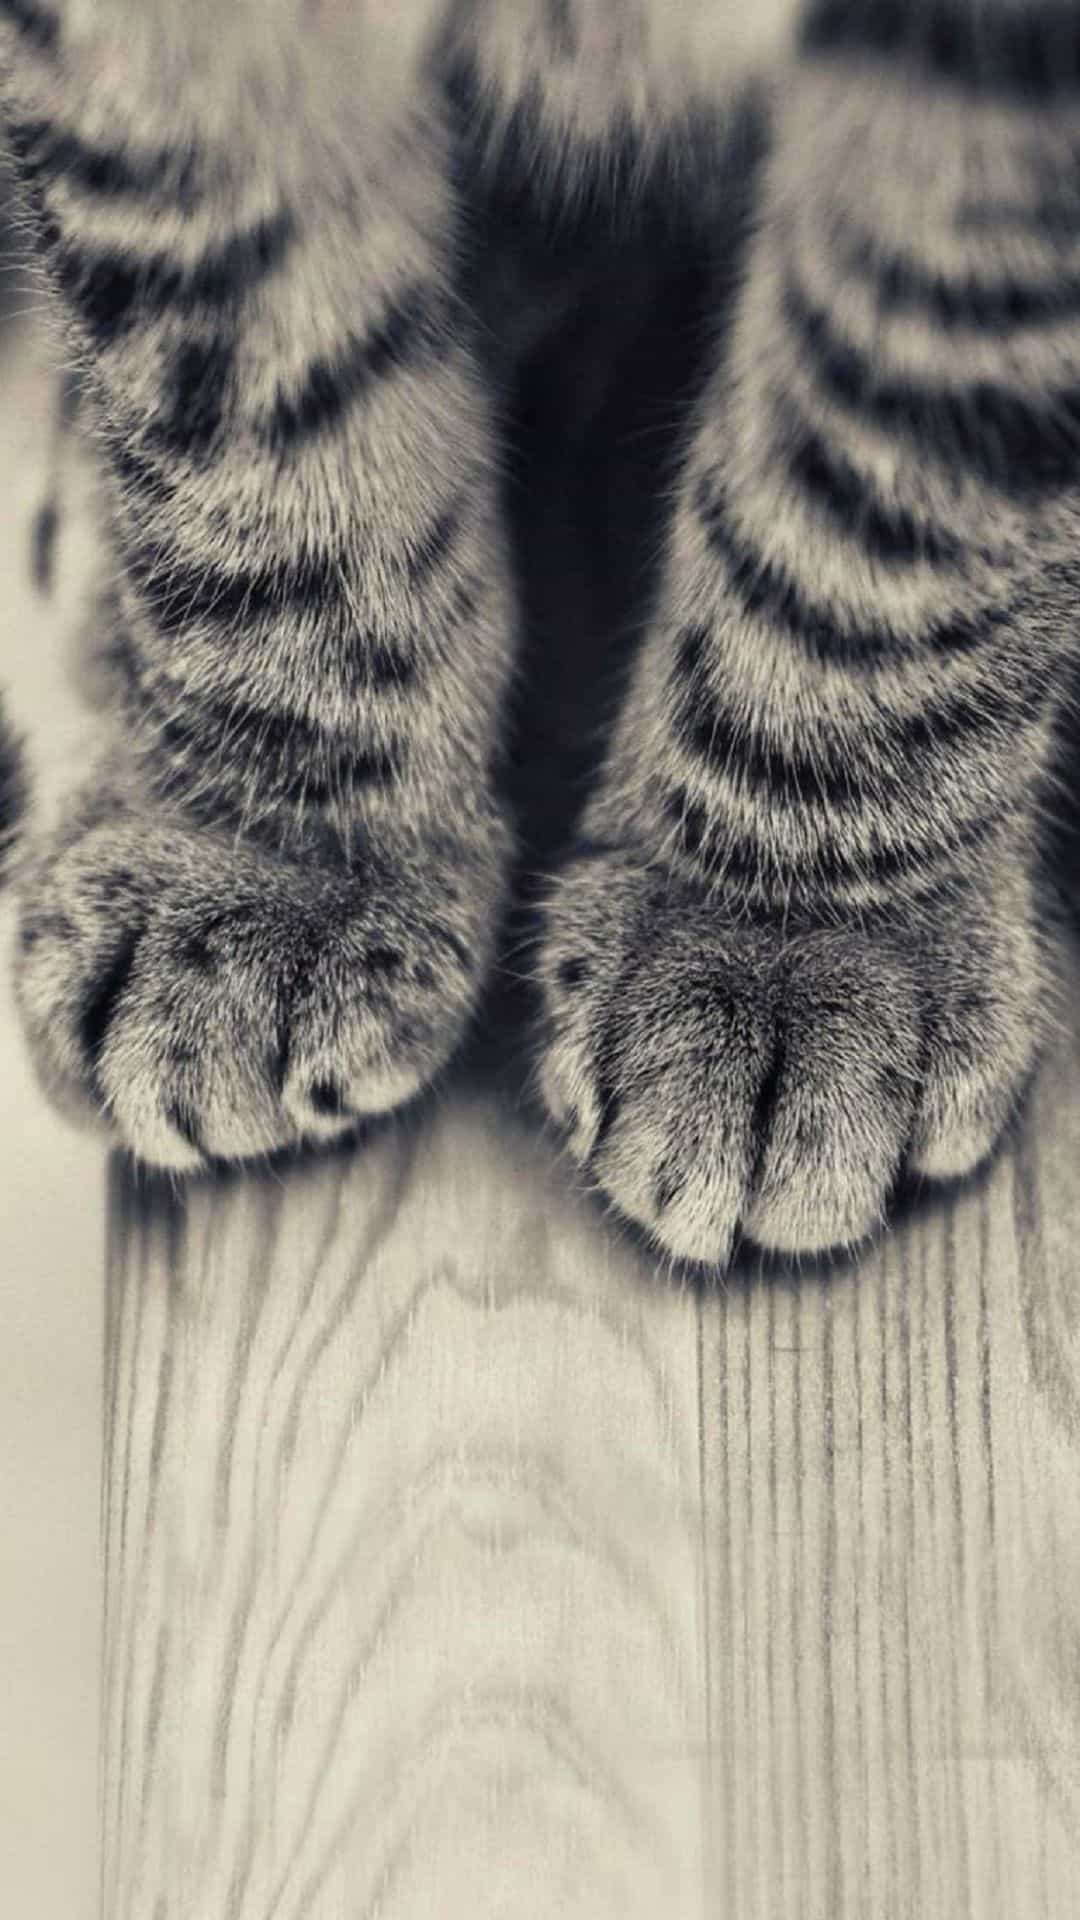 gray-striped-kitten-legs-cat-android-wallpaper